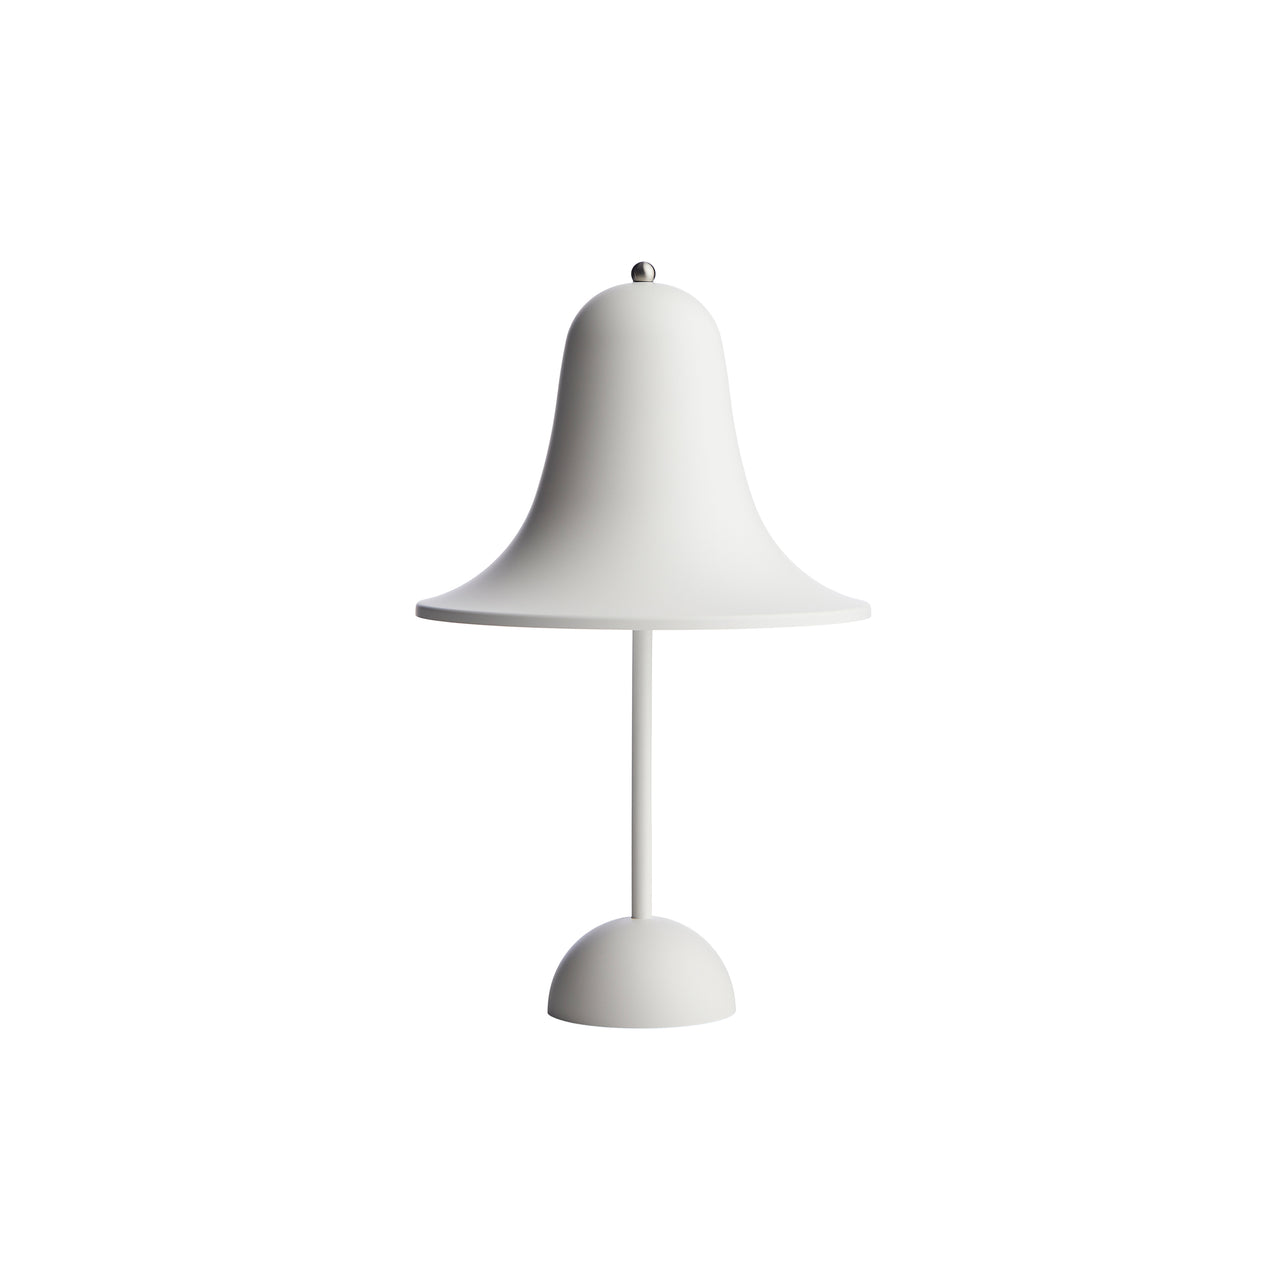 Pantop Portable Table Lamp: Matt White